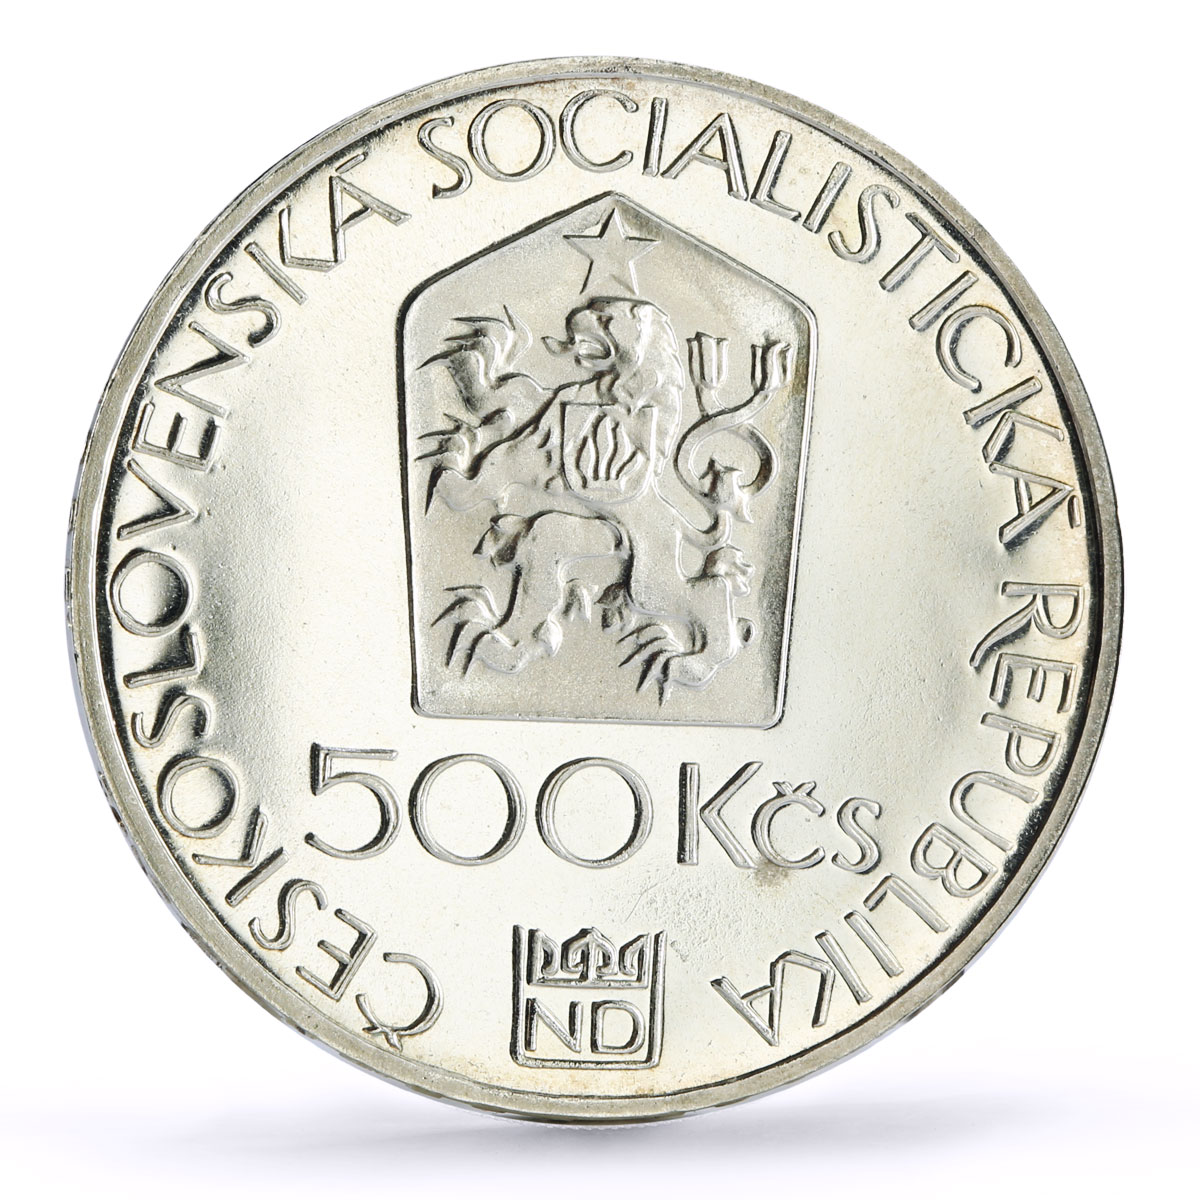 Czechoslovakia 500 korun Prague National Theater KM-112 proof silver coin 1983